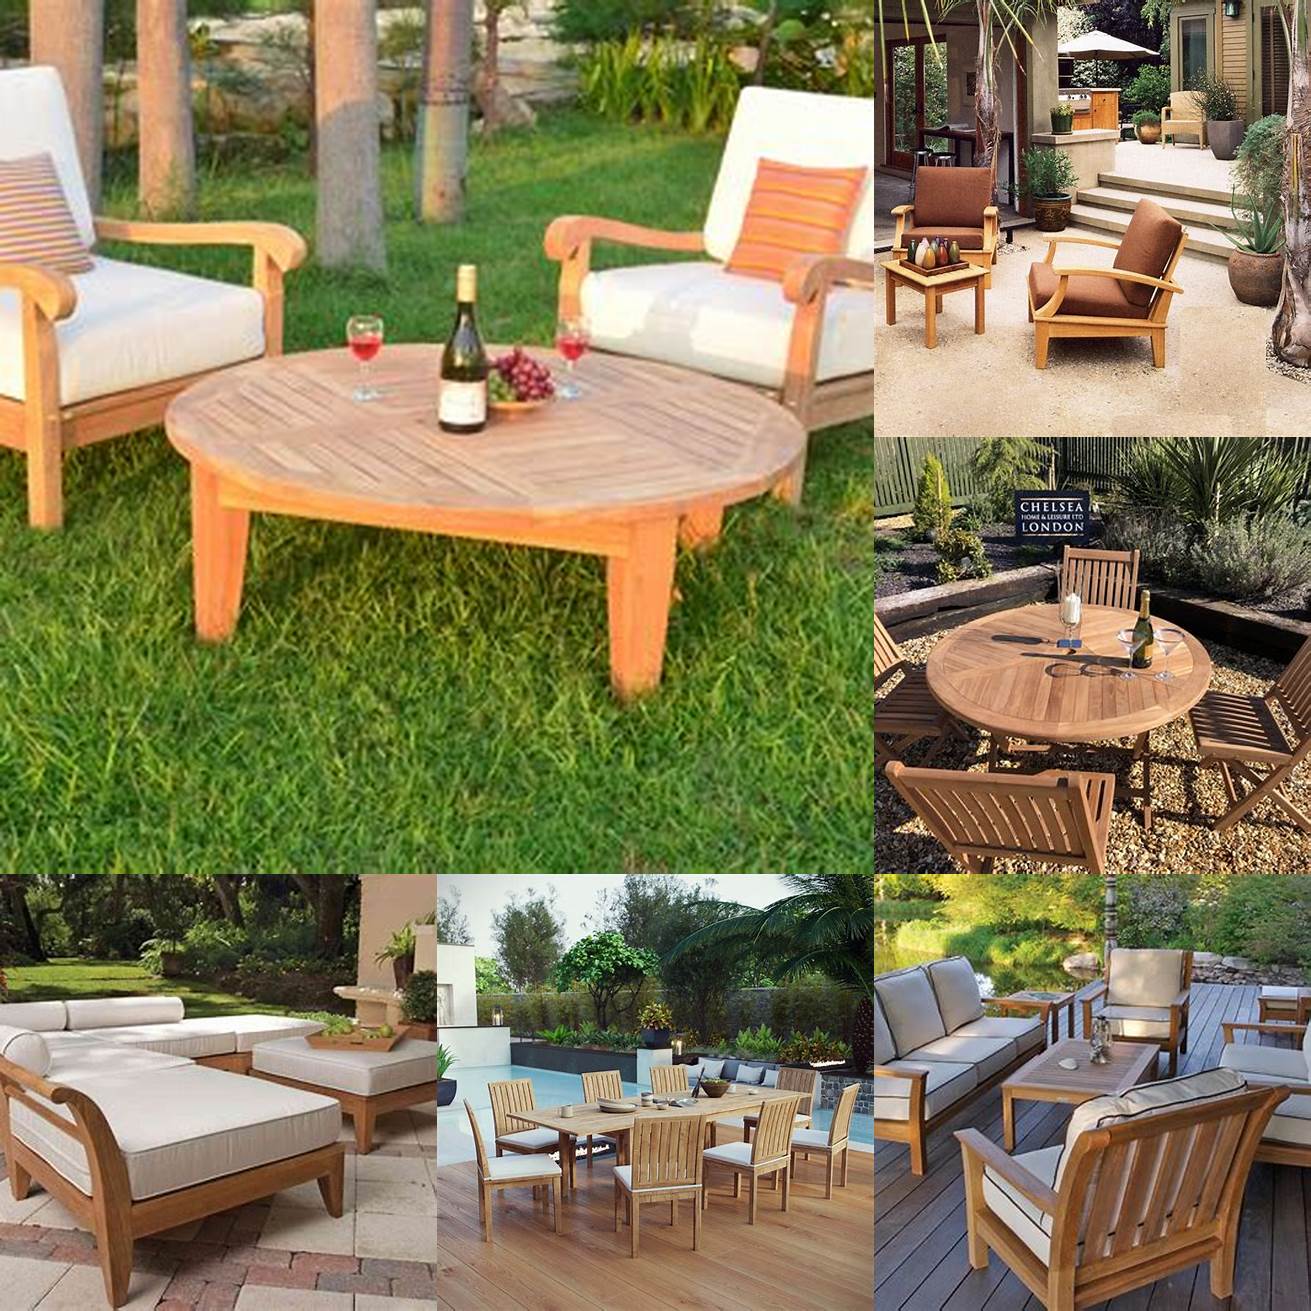 Teak Furniture in an Outdoor Space